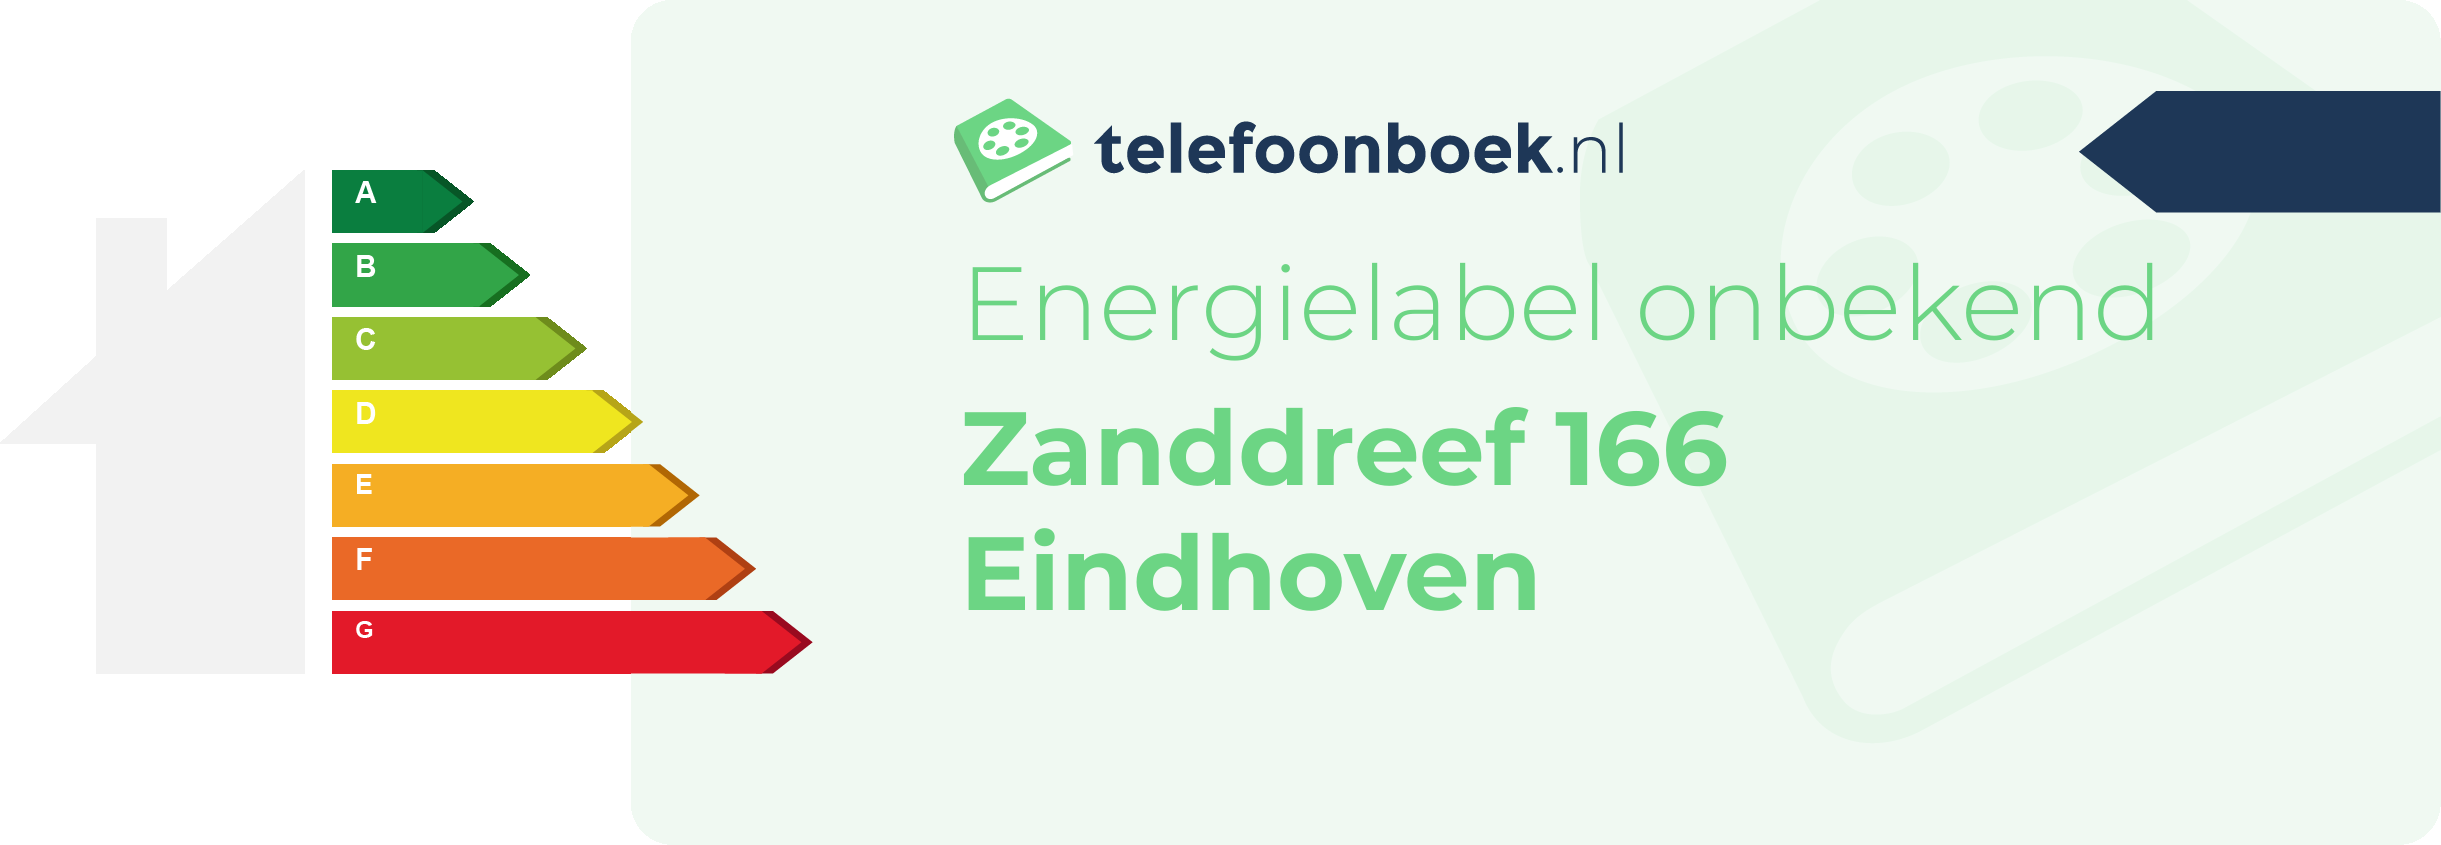 Energielabel Zanddreef 166 Eindhoven